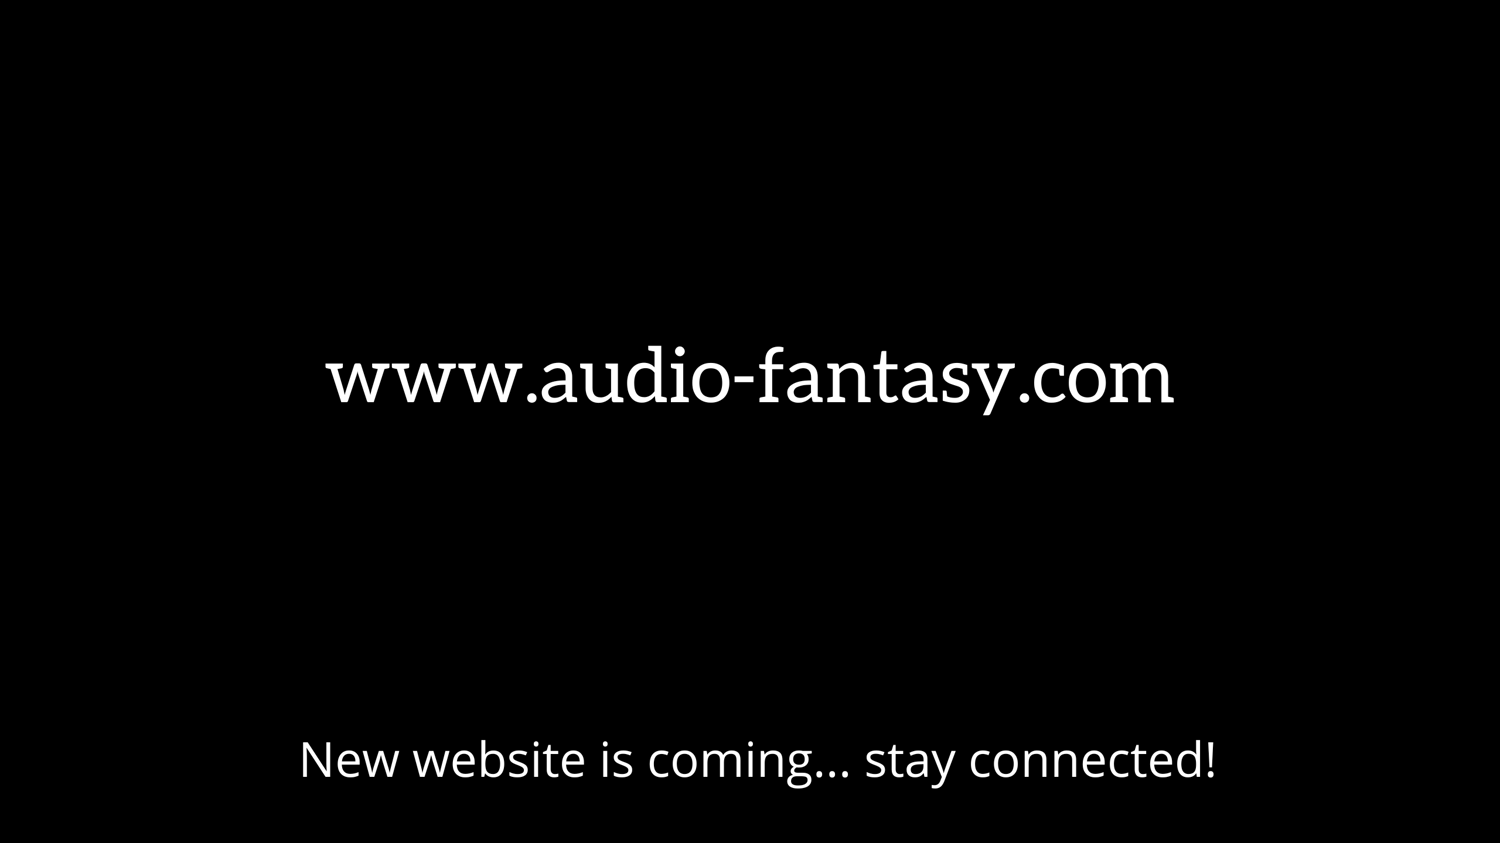 www.audio-fantasy.com - New website is coming